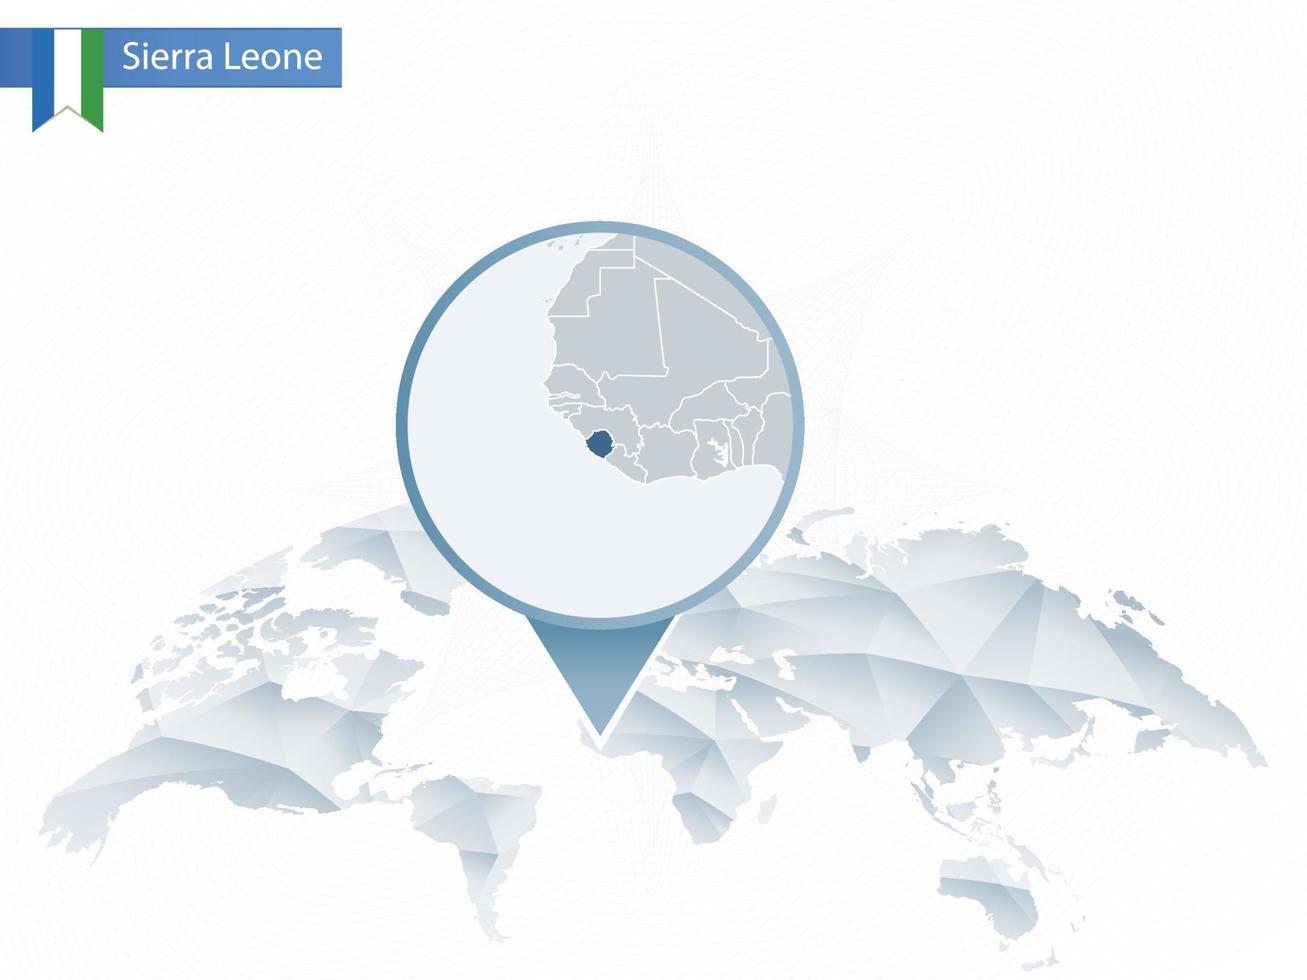 abstracte afgeronde wereldkaart met vastgezette gedetailleerde Sierra Leone-kaart. vector